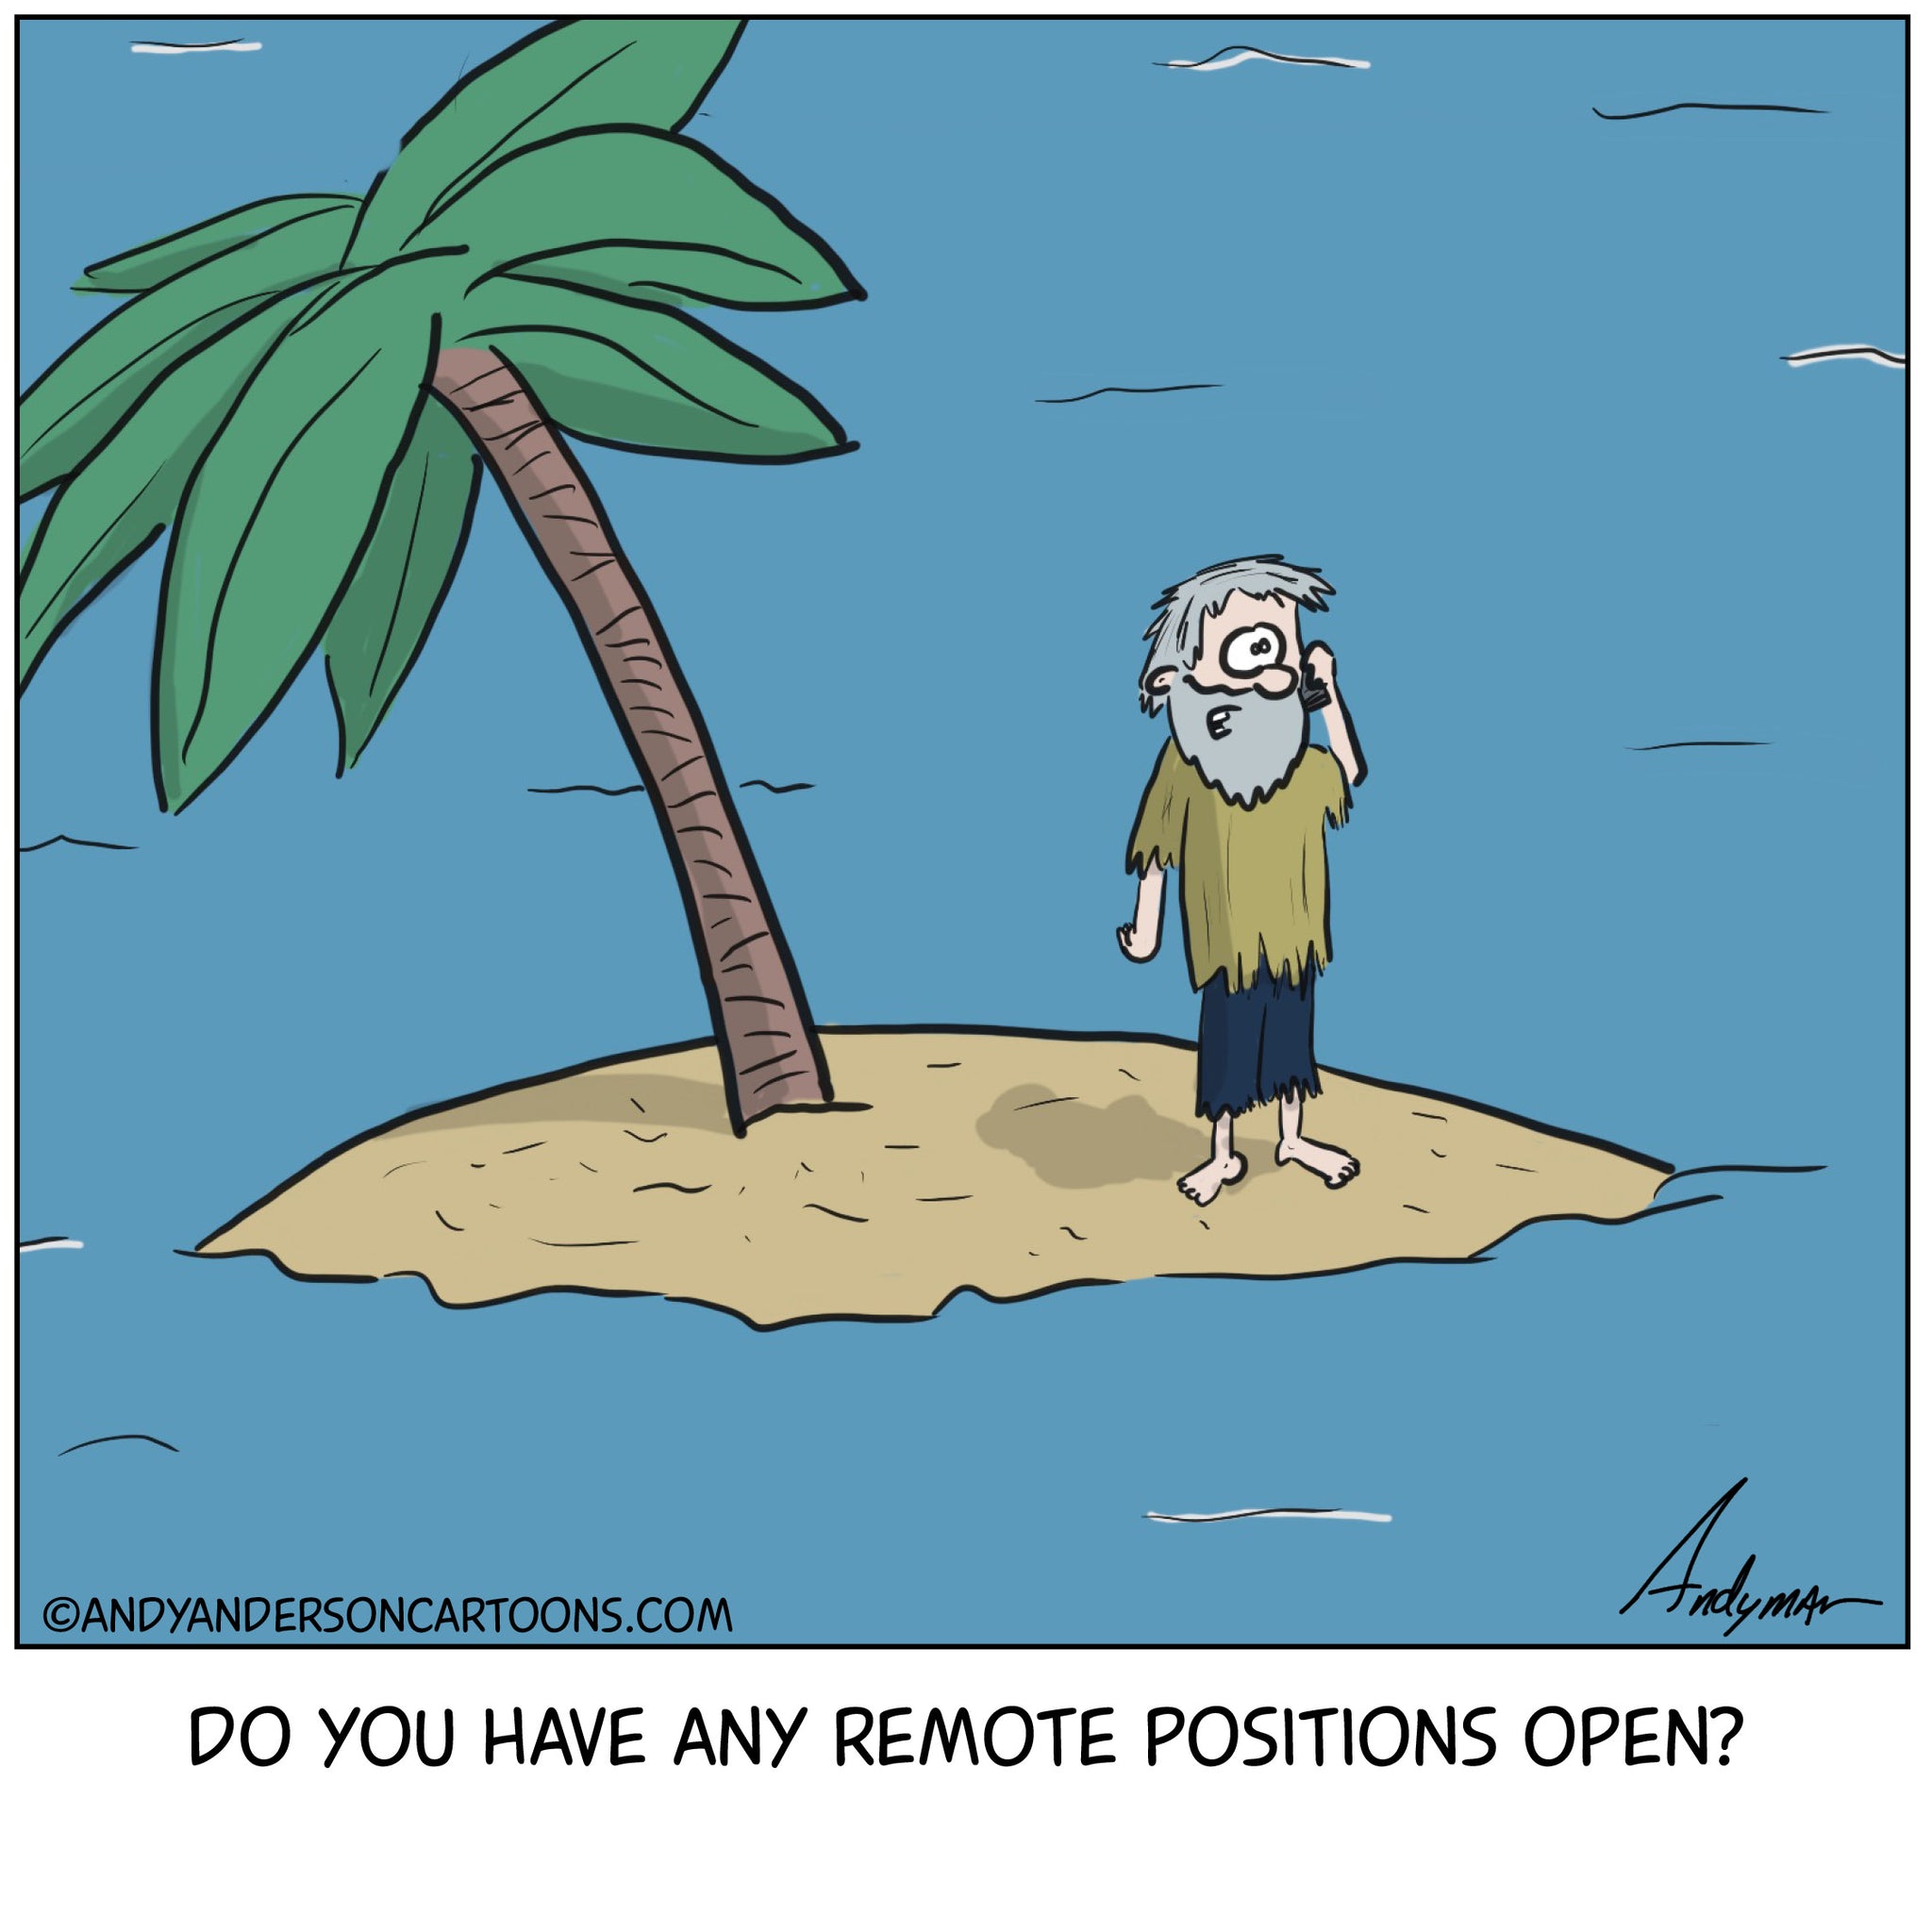 Cartoon about man on a deserted island seeking remote work